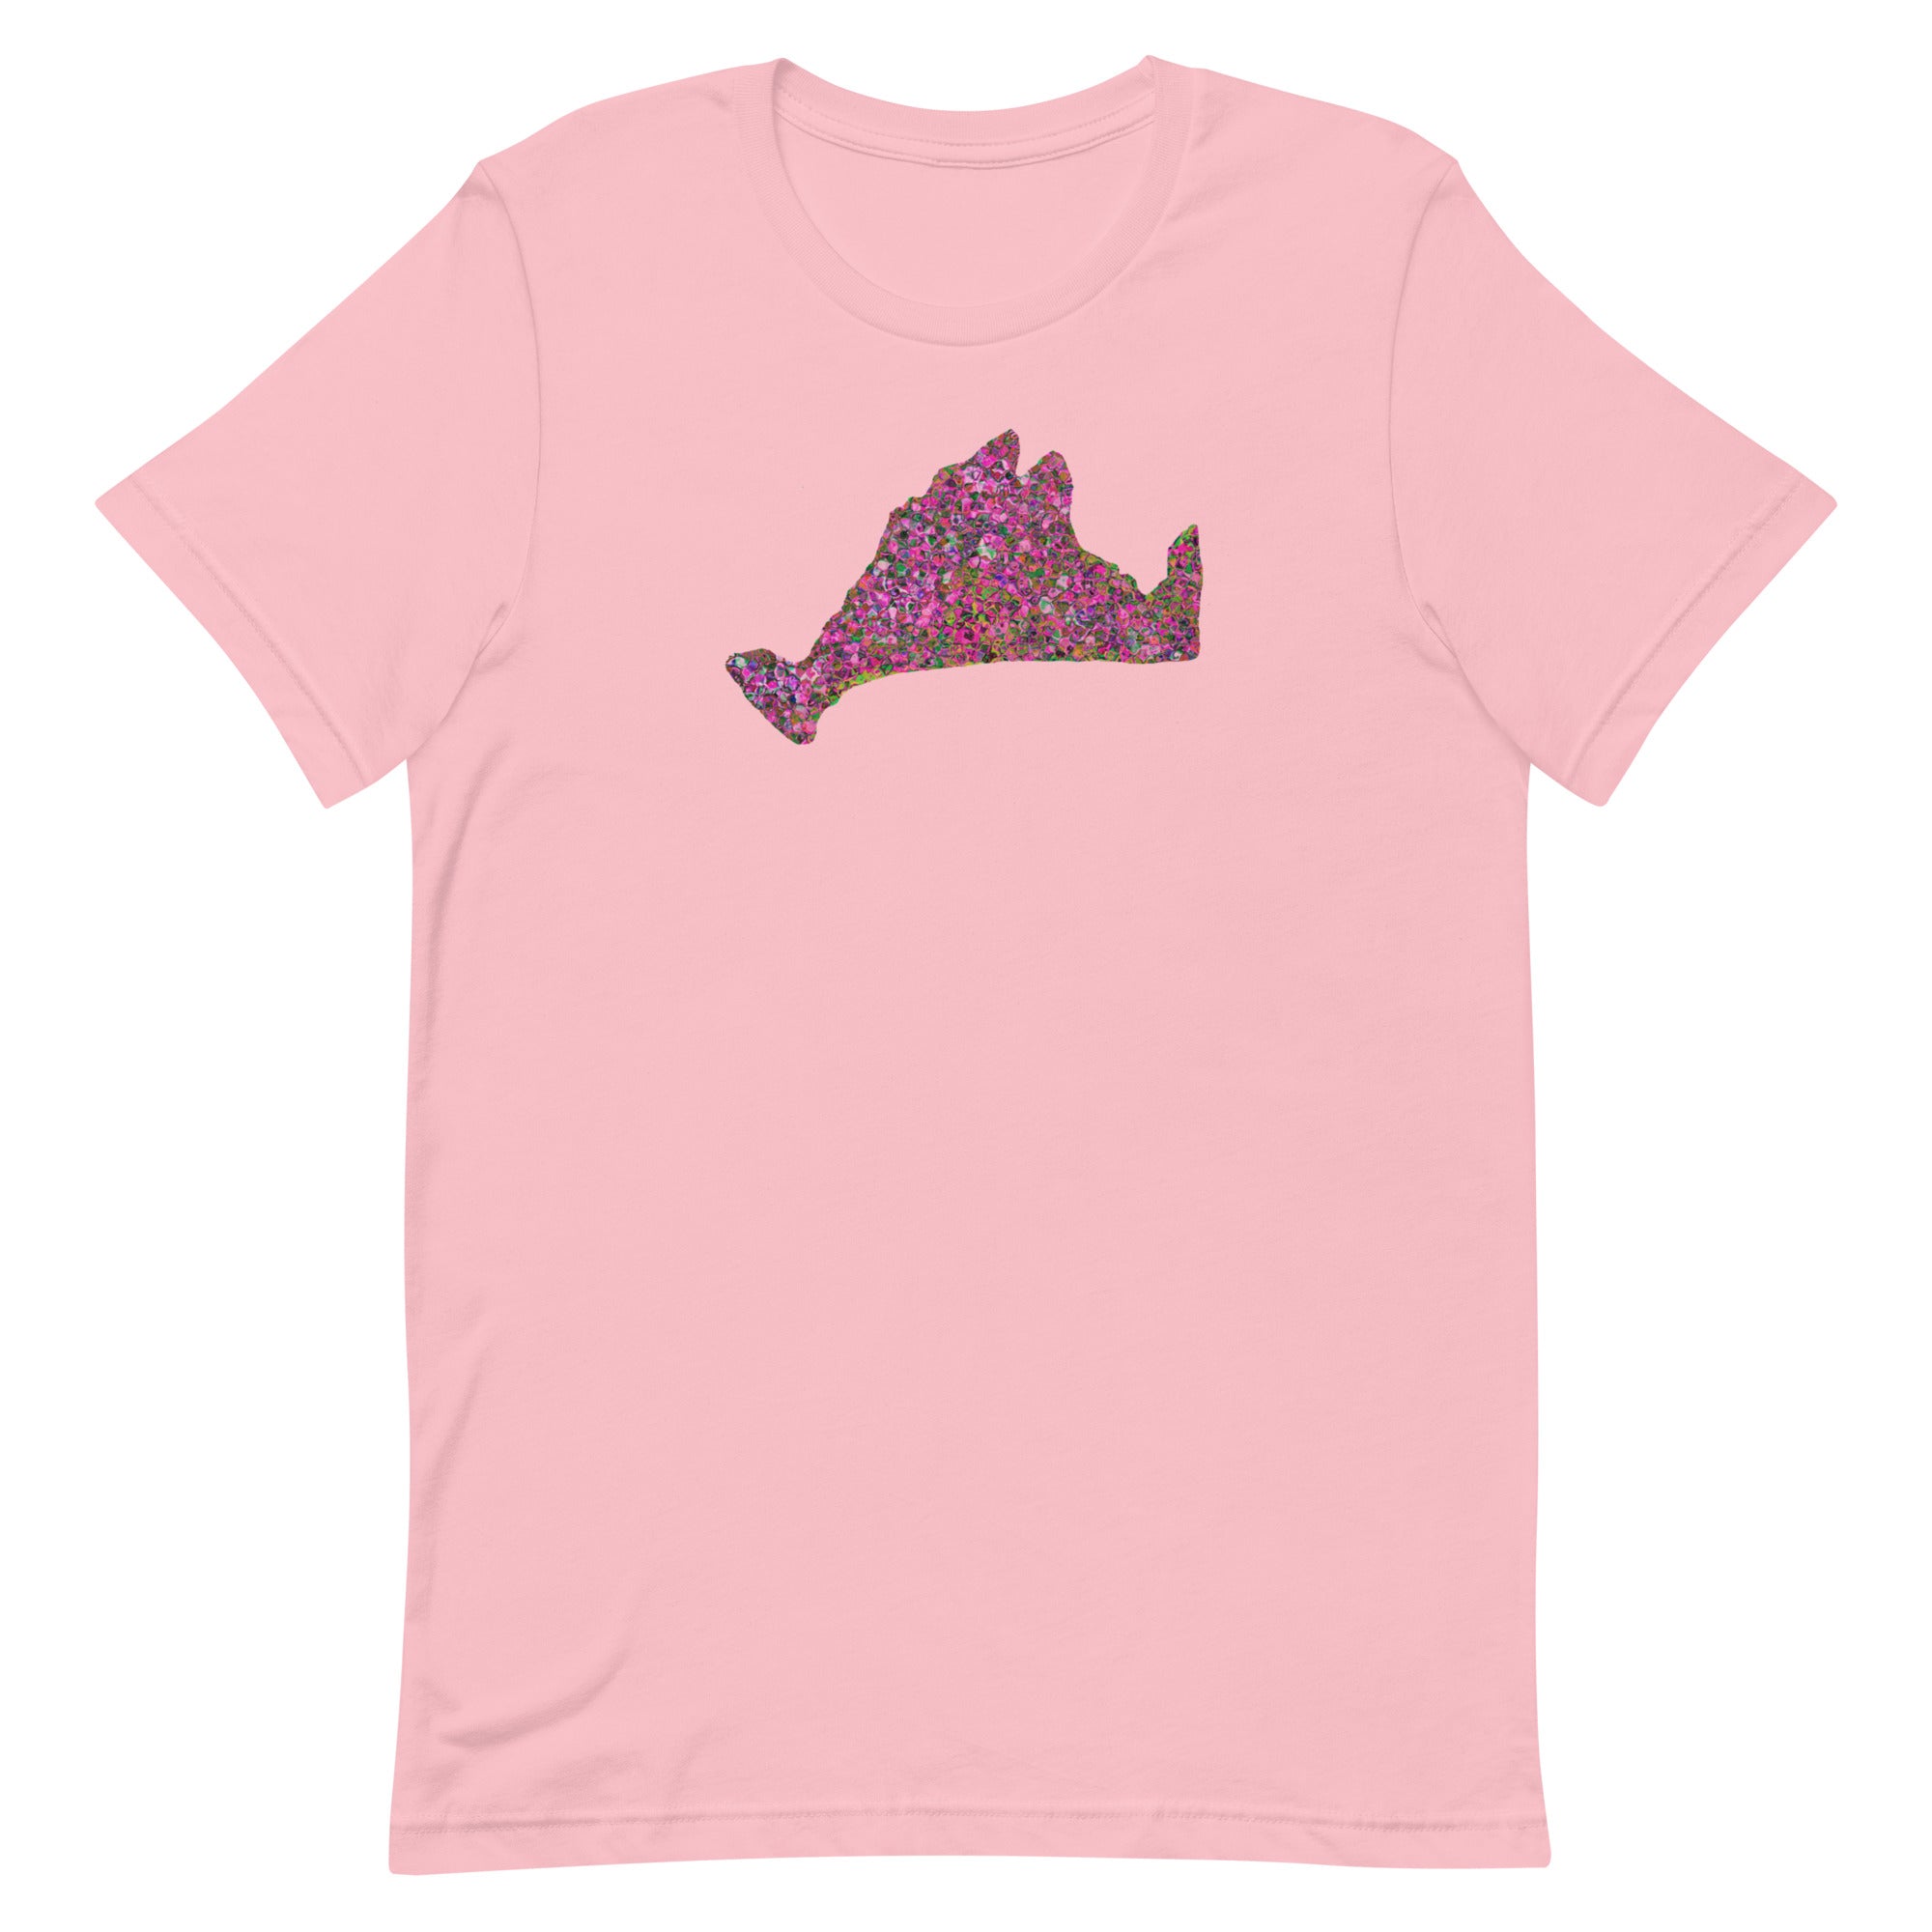 Short Sleeve Tee Shirt-Kaleidoscope Pink